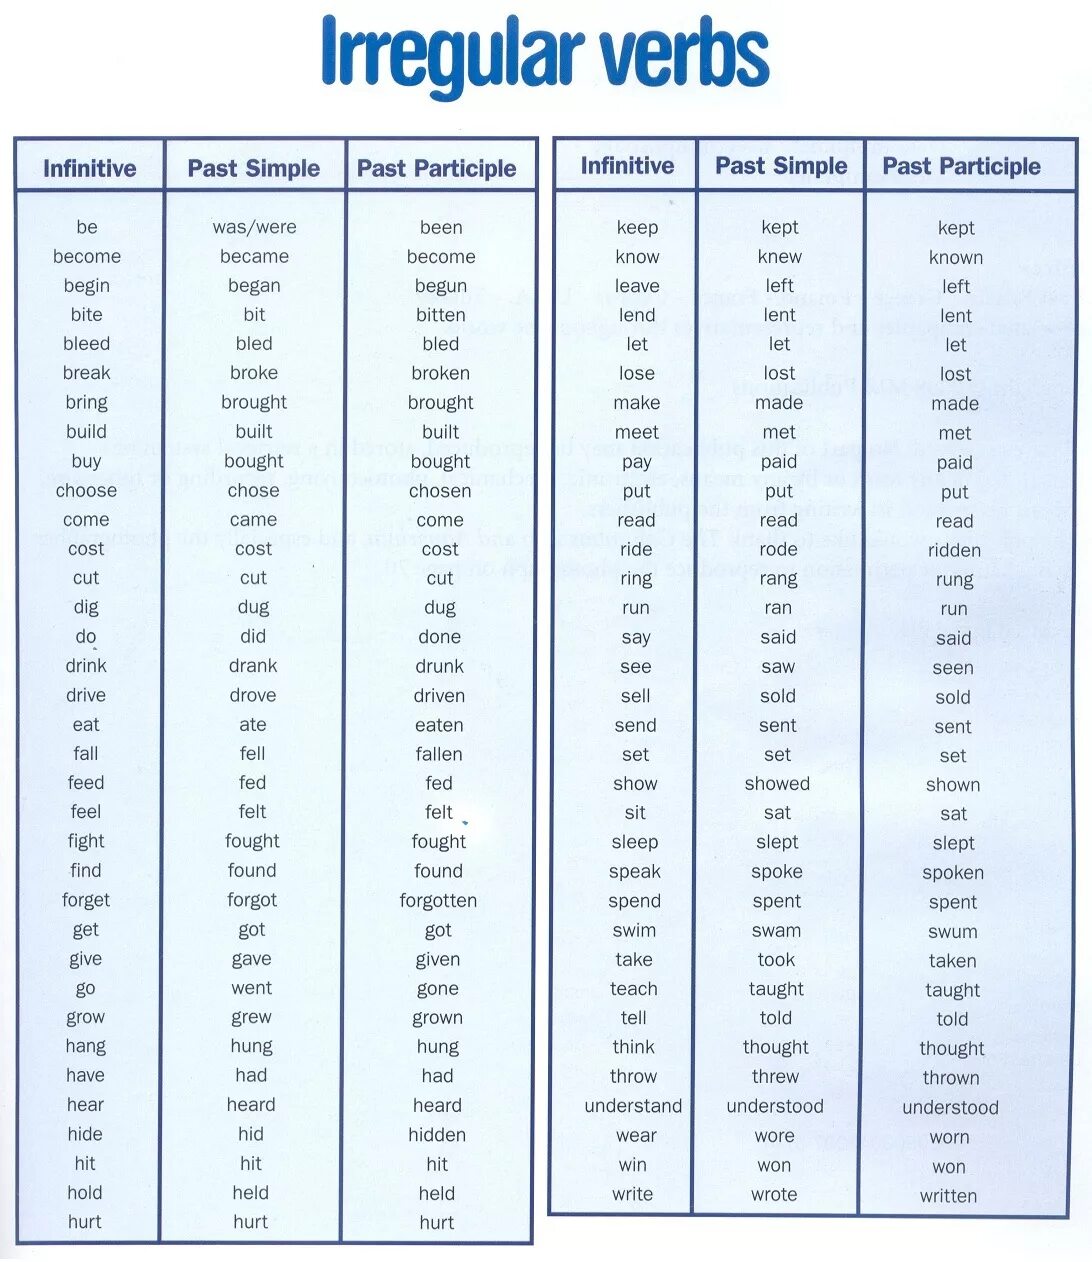 Past simple Irregular verbs таблица. Past simple таблица неправильных глаголов. Past participle неправильные глаголы. Неправильные глаголы английского Irregular verbs.